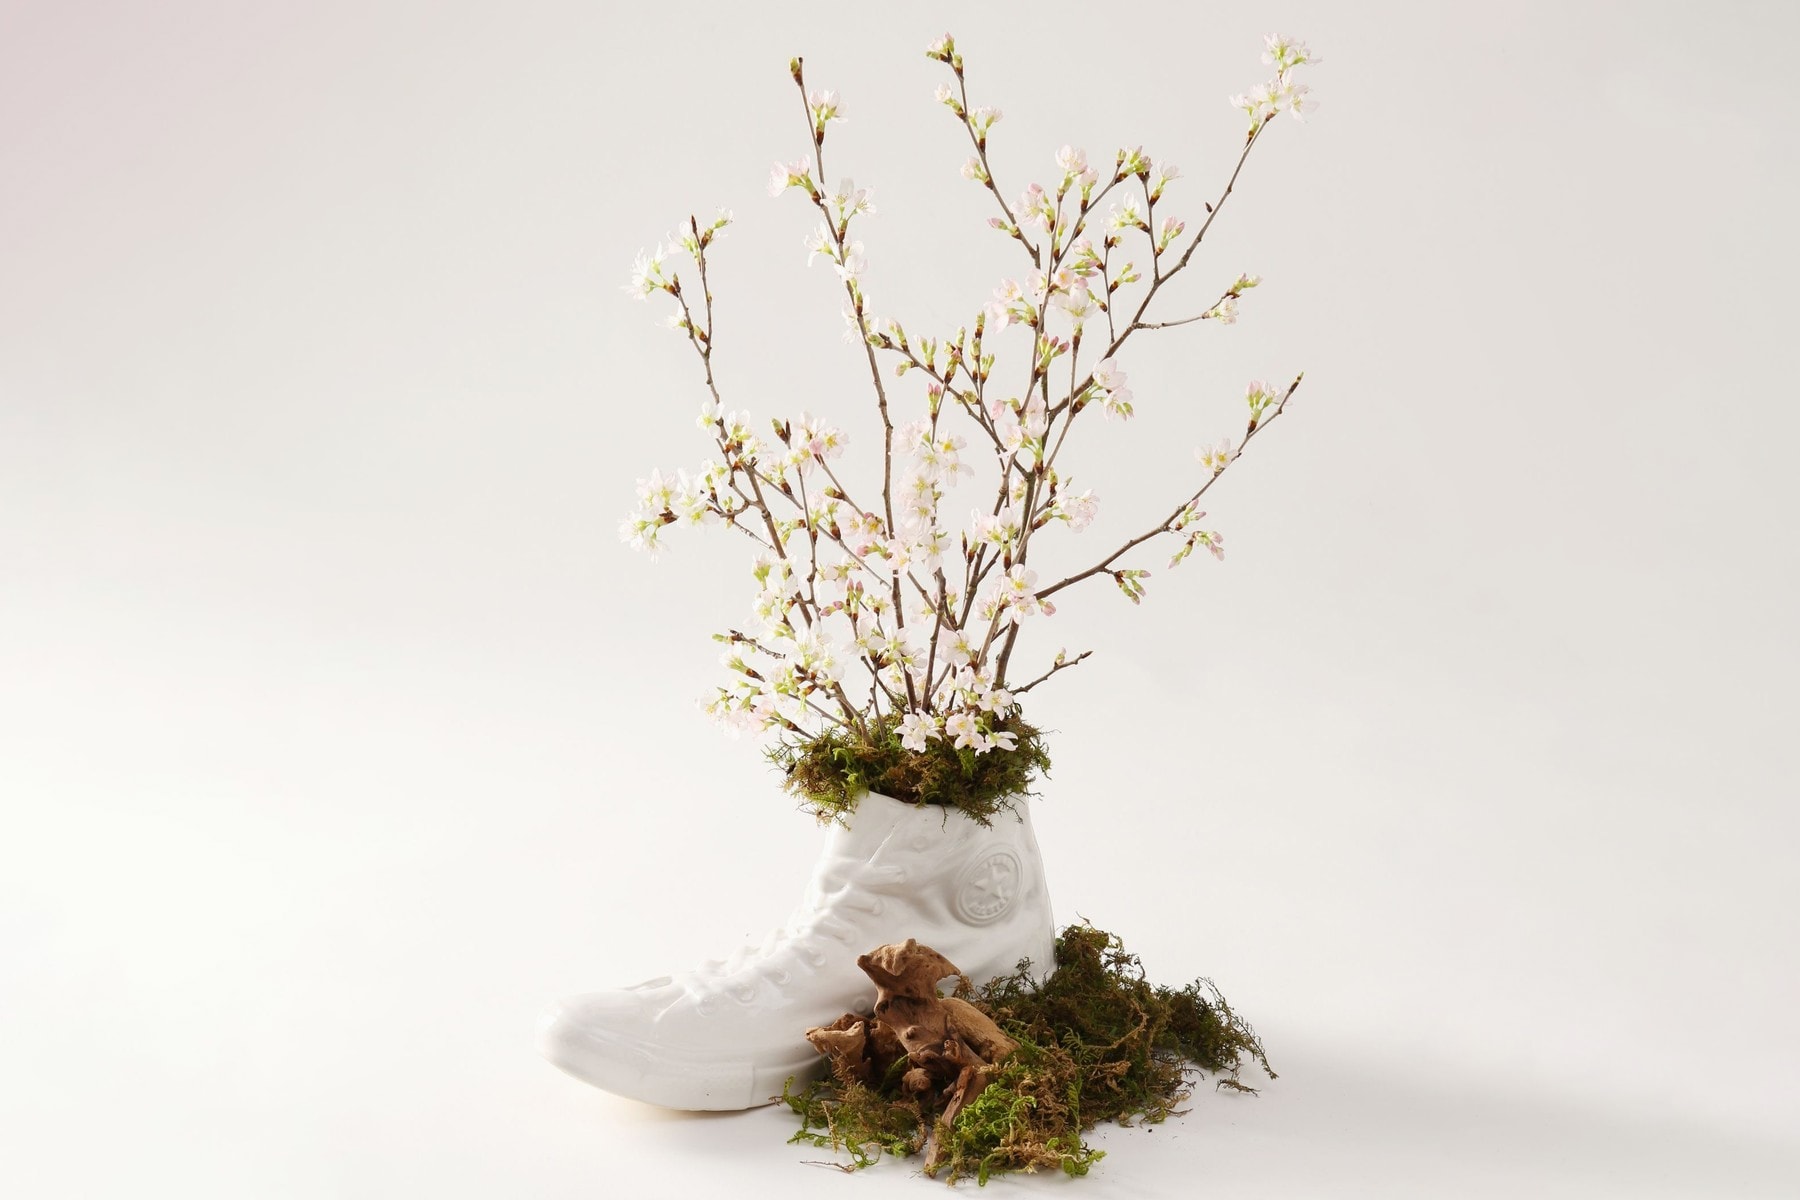 Converse Tokyo Ceramic Japan blnk Collaboration Sneaker Vases Flowers